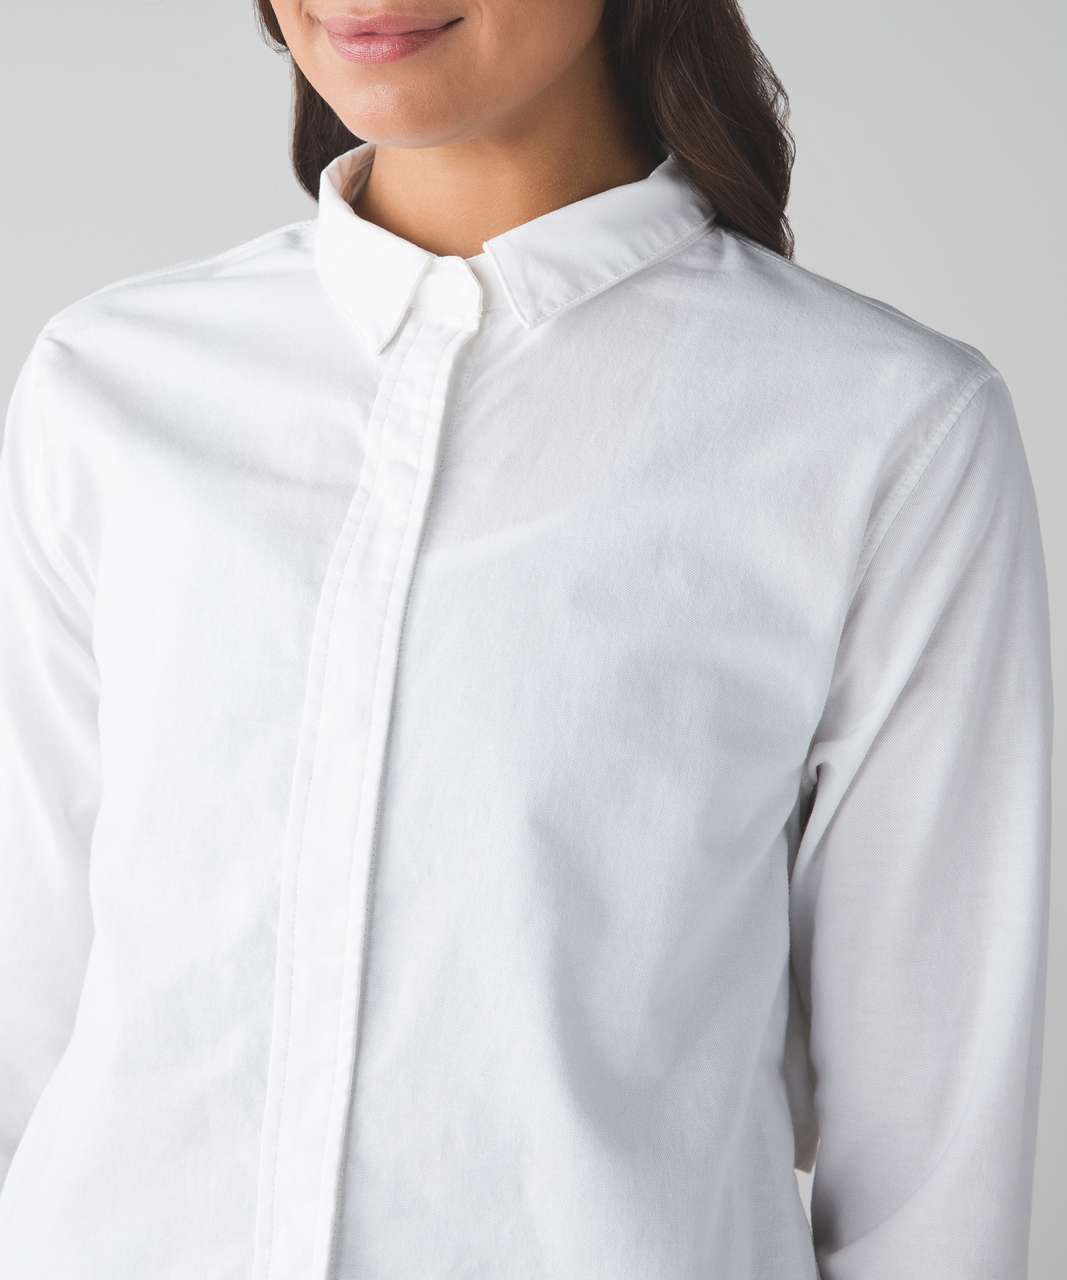 Lululemon Getaway Shirt - White / White